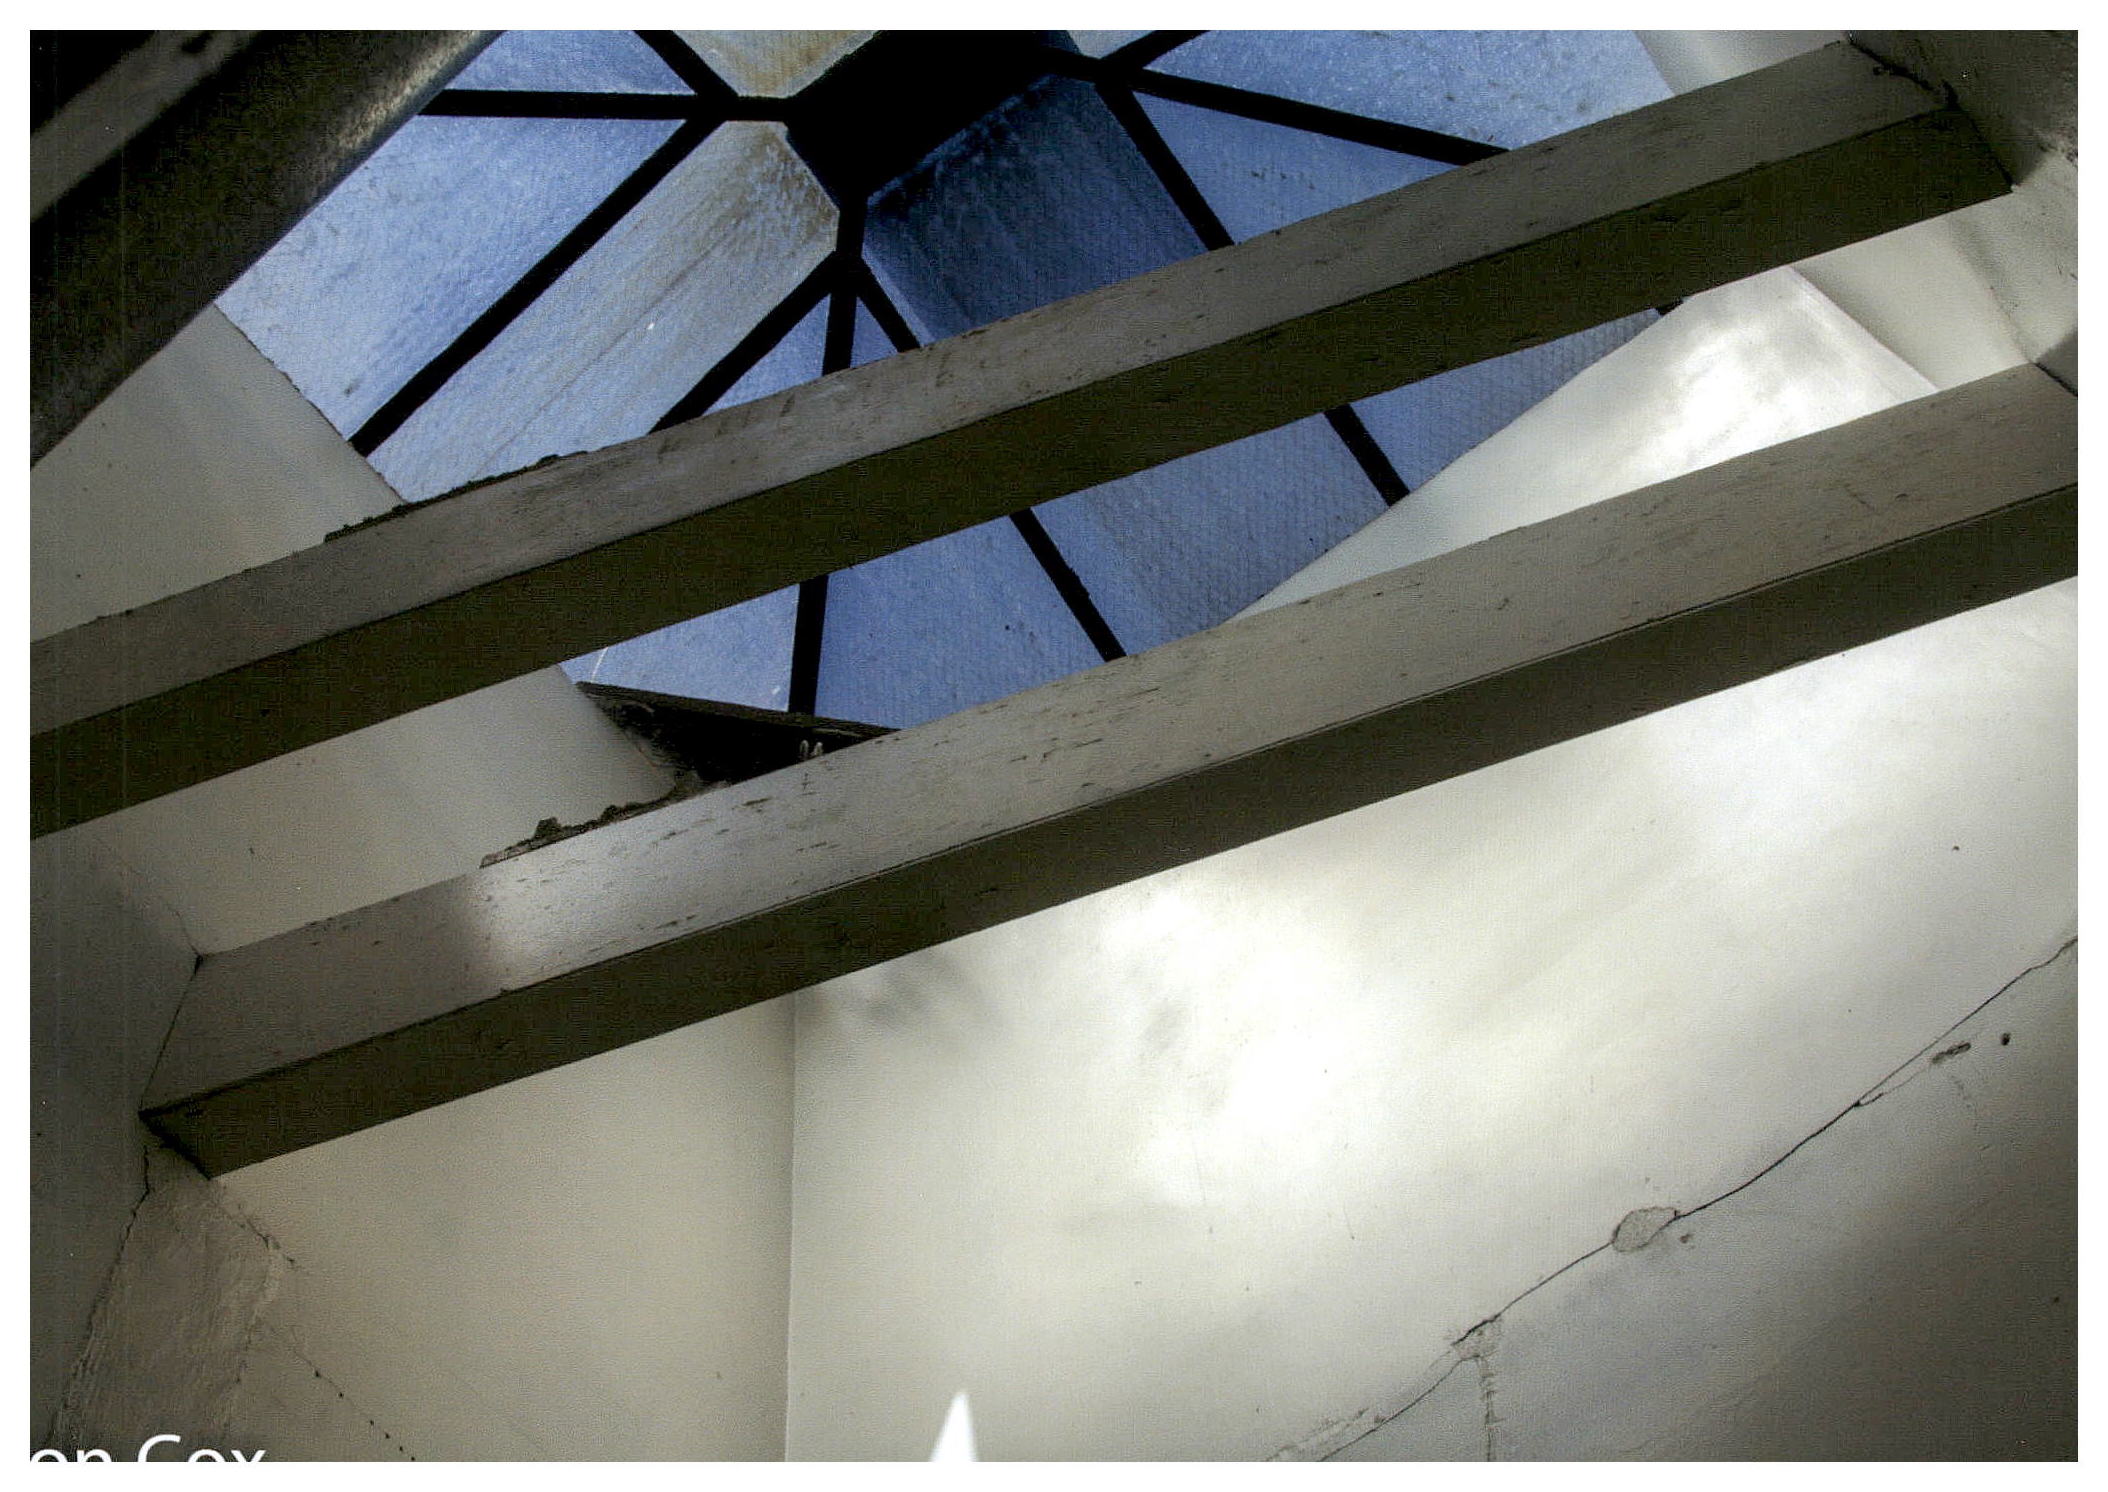 Before: unrestored skylight before rehabilitation.